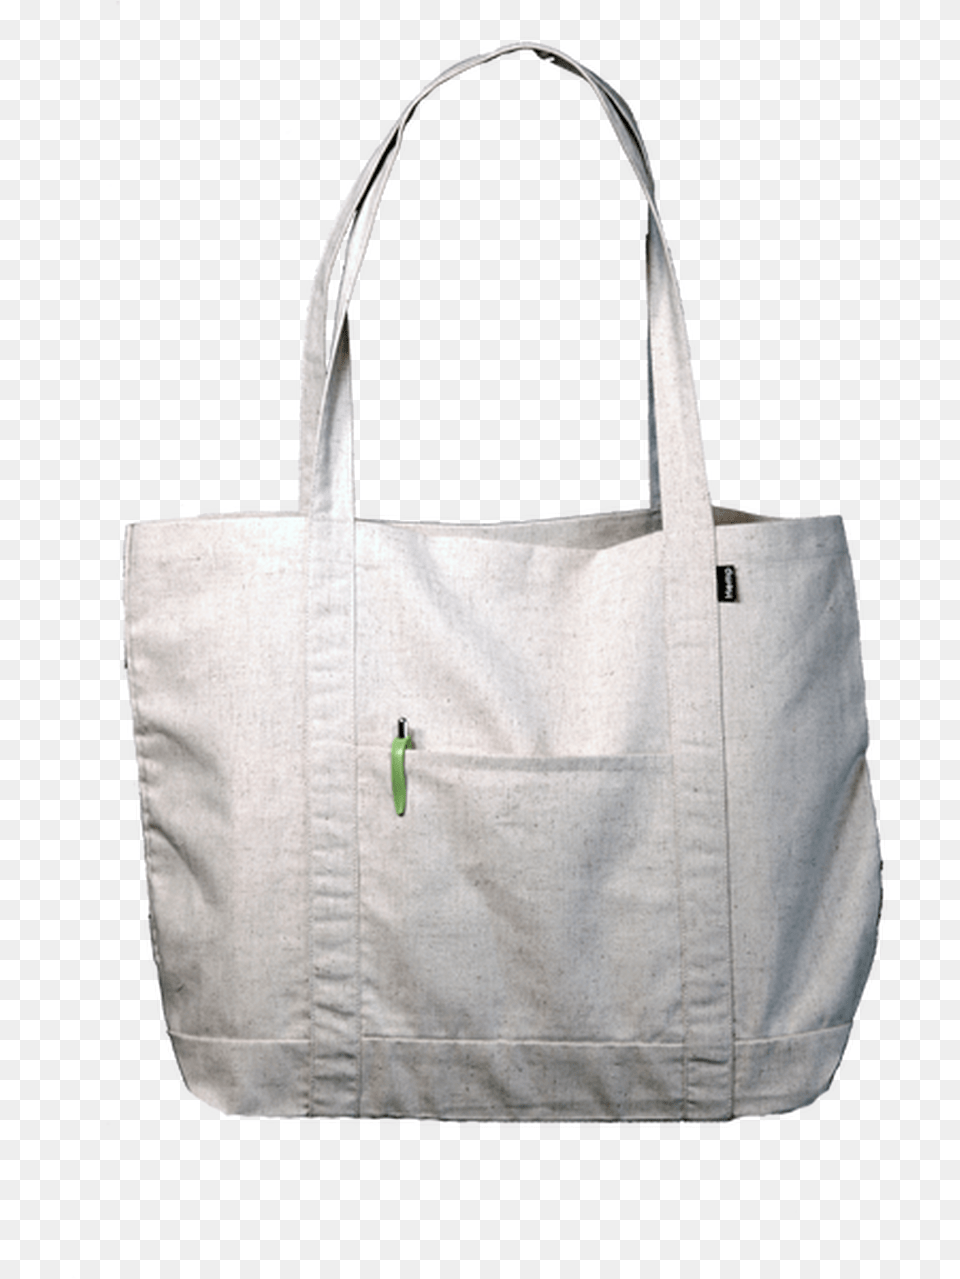 Hemp Grocery Tote Bag Hessian Fabric, Accessories, Handbag, Tote Bag, Purse Free Transparent Png